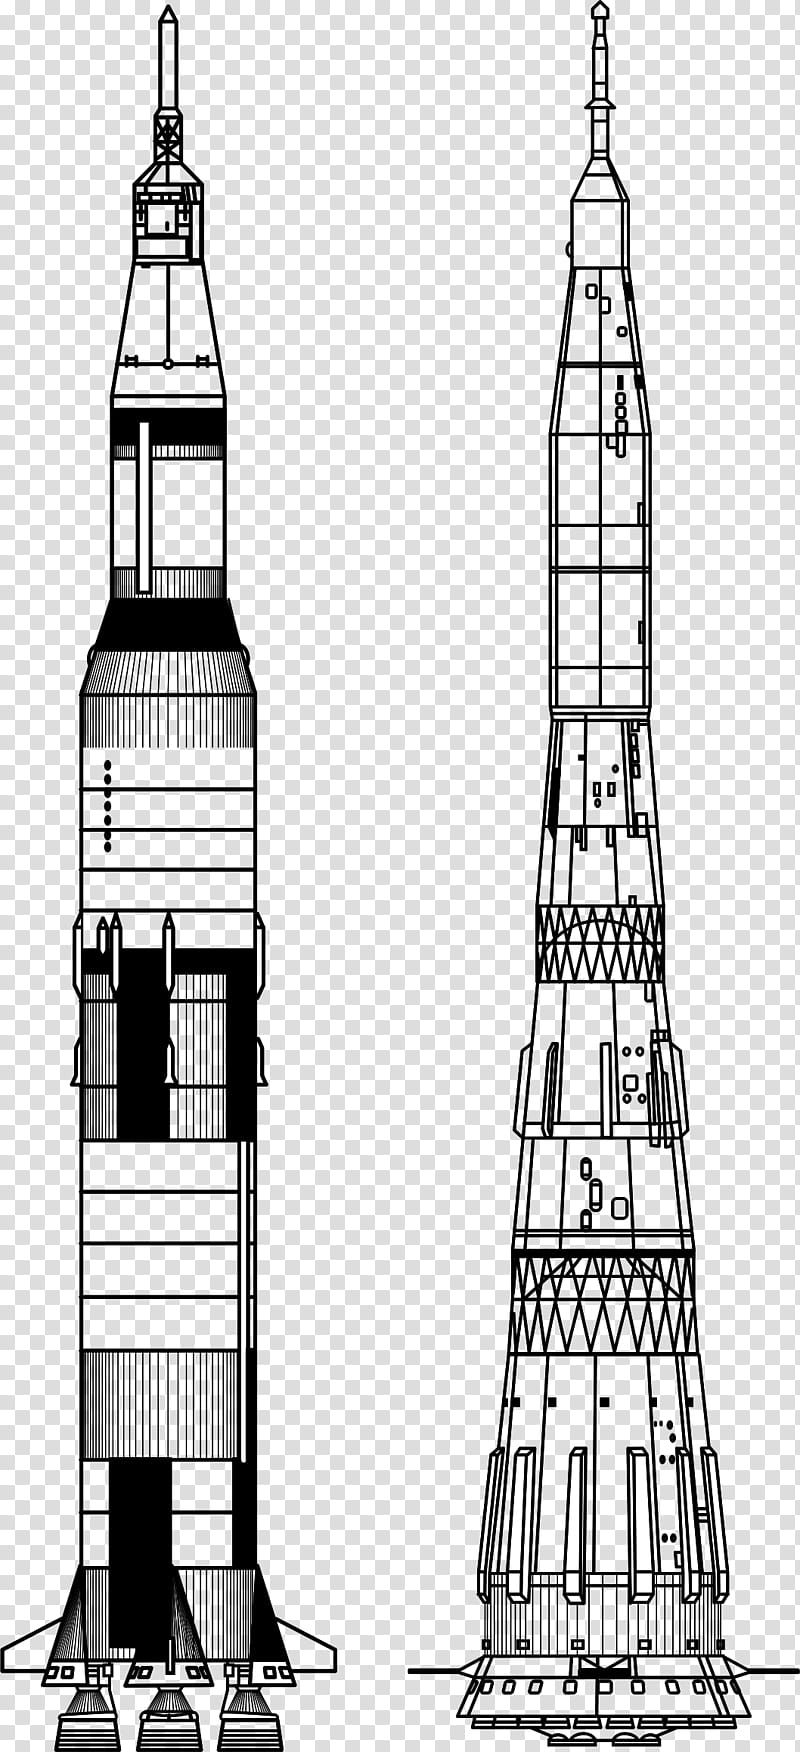 Moon Drawing, Apollo Program, Apollo 11, Saturn V, N1, Apollo 4, Apollo 13, Rocket transparent background PNG clipart